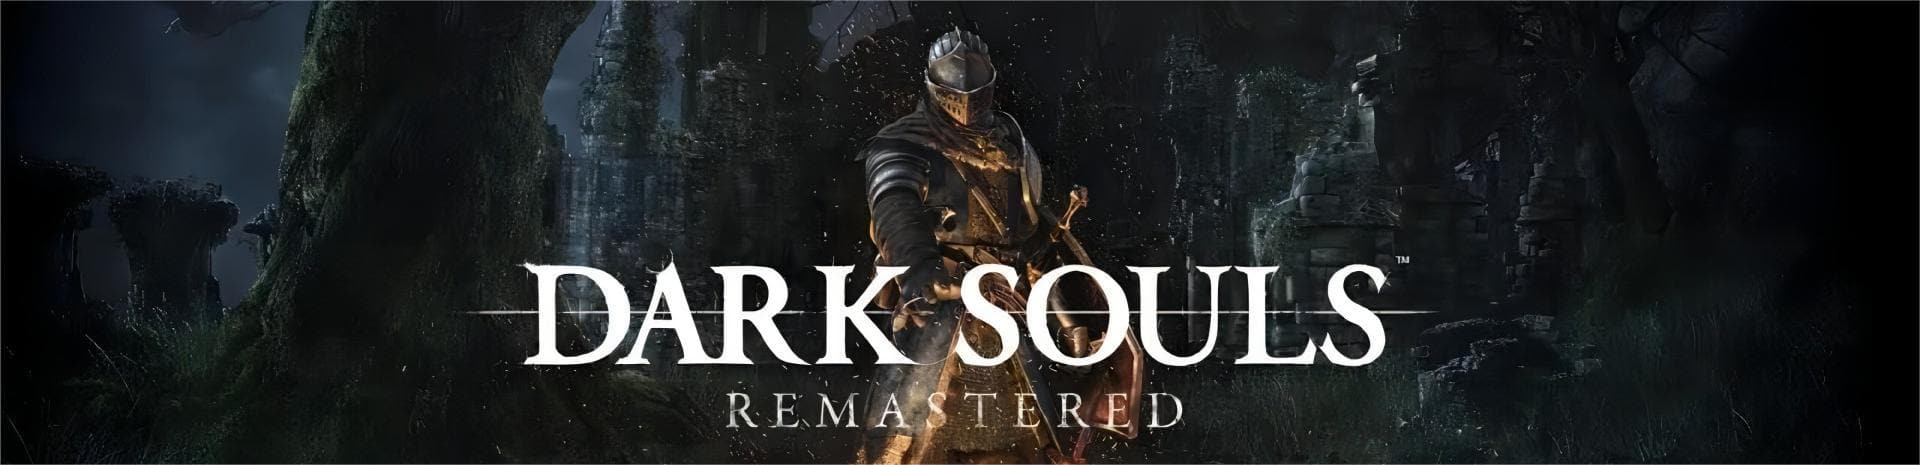 Buy Dark Souls Remastered Soul, cheap Dark Souls Remastered